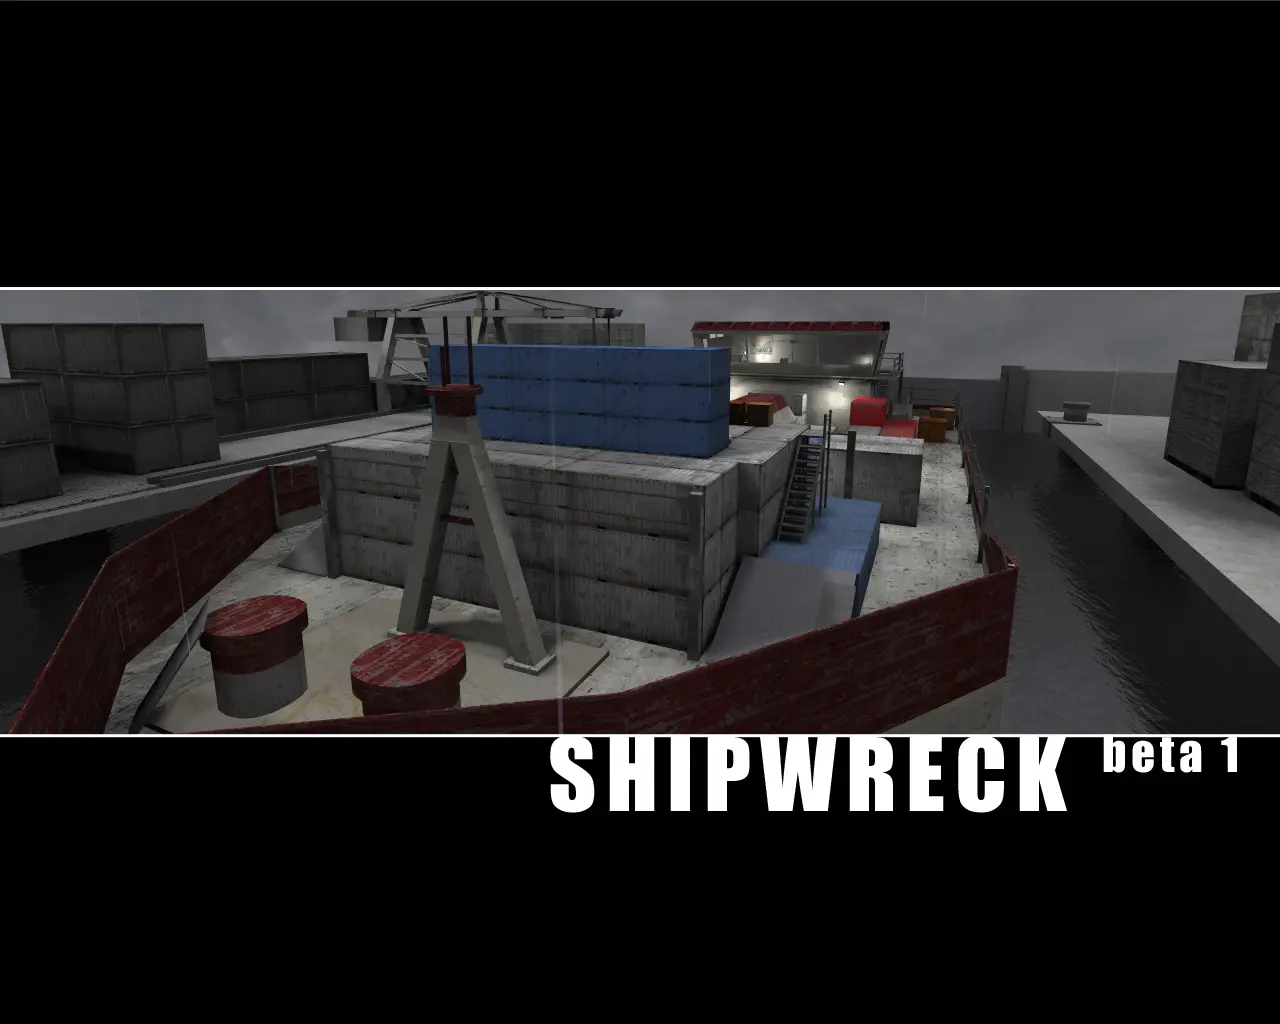 ut4_shipwreck_beta1